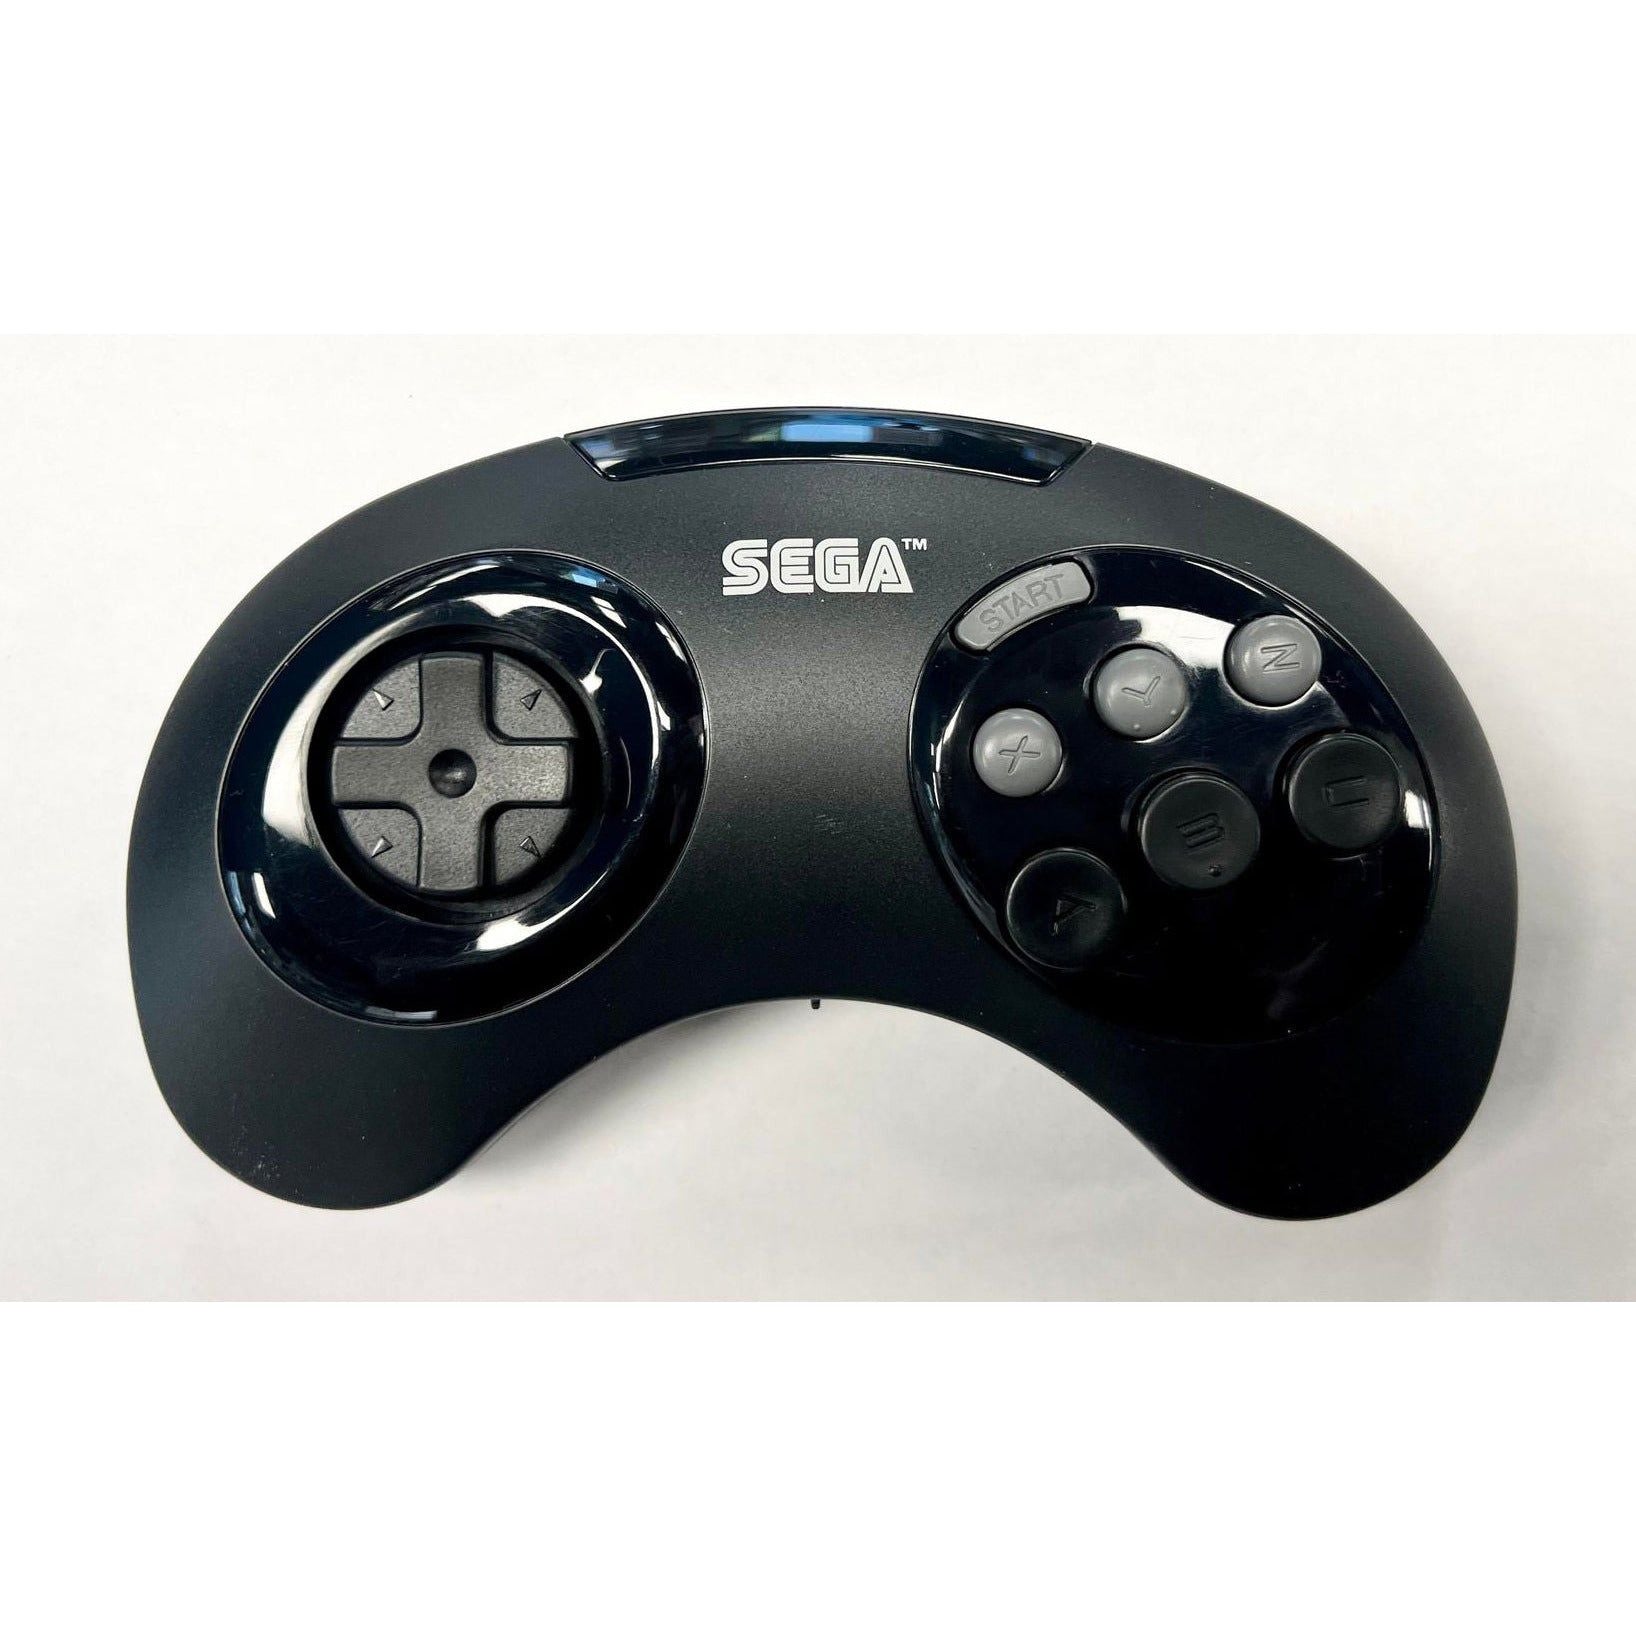 Manette sans fil Sega Genesis - 6 boutons